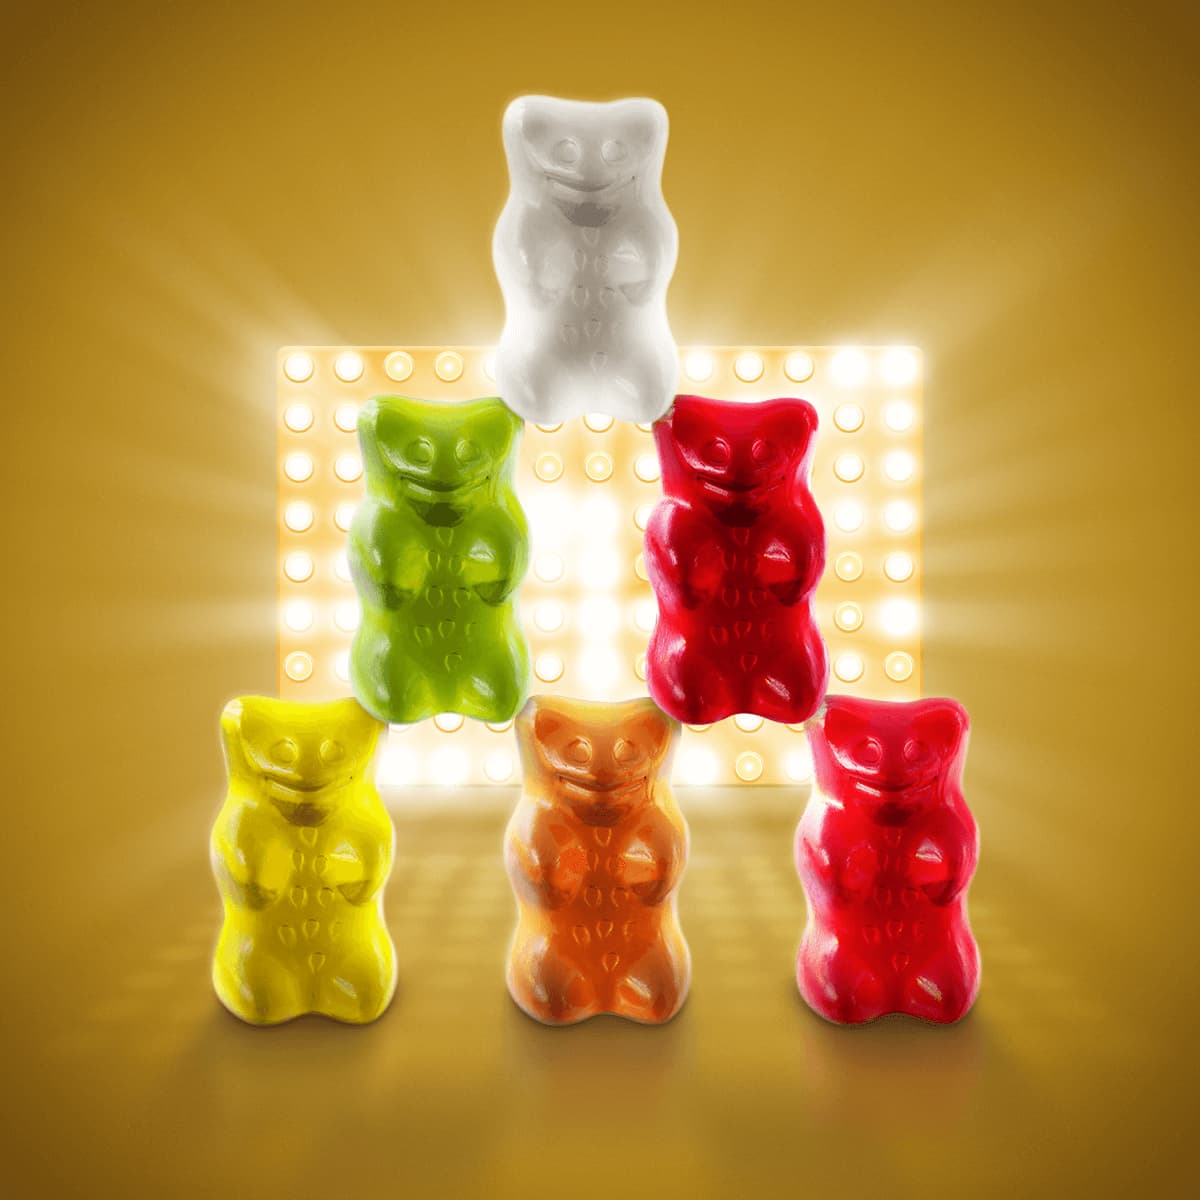 Are Gummy Bears Gluten-Free?